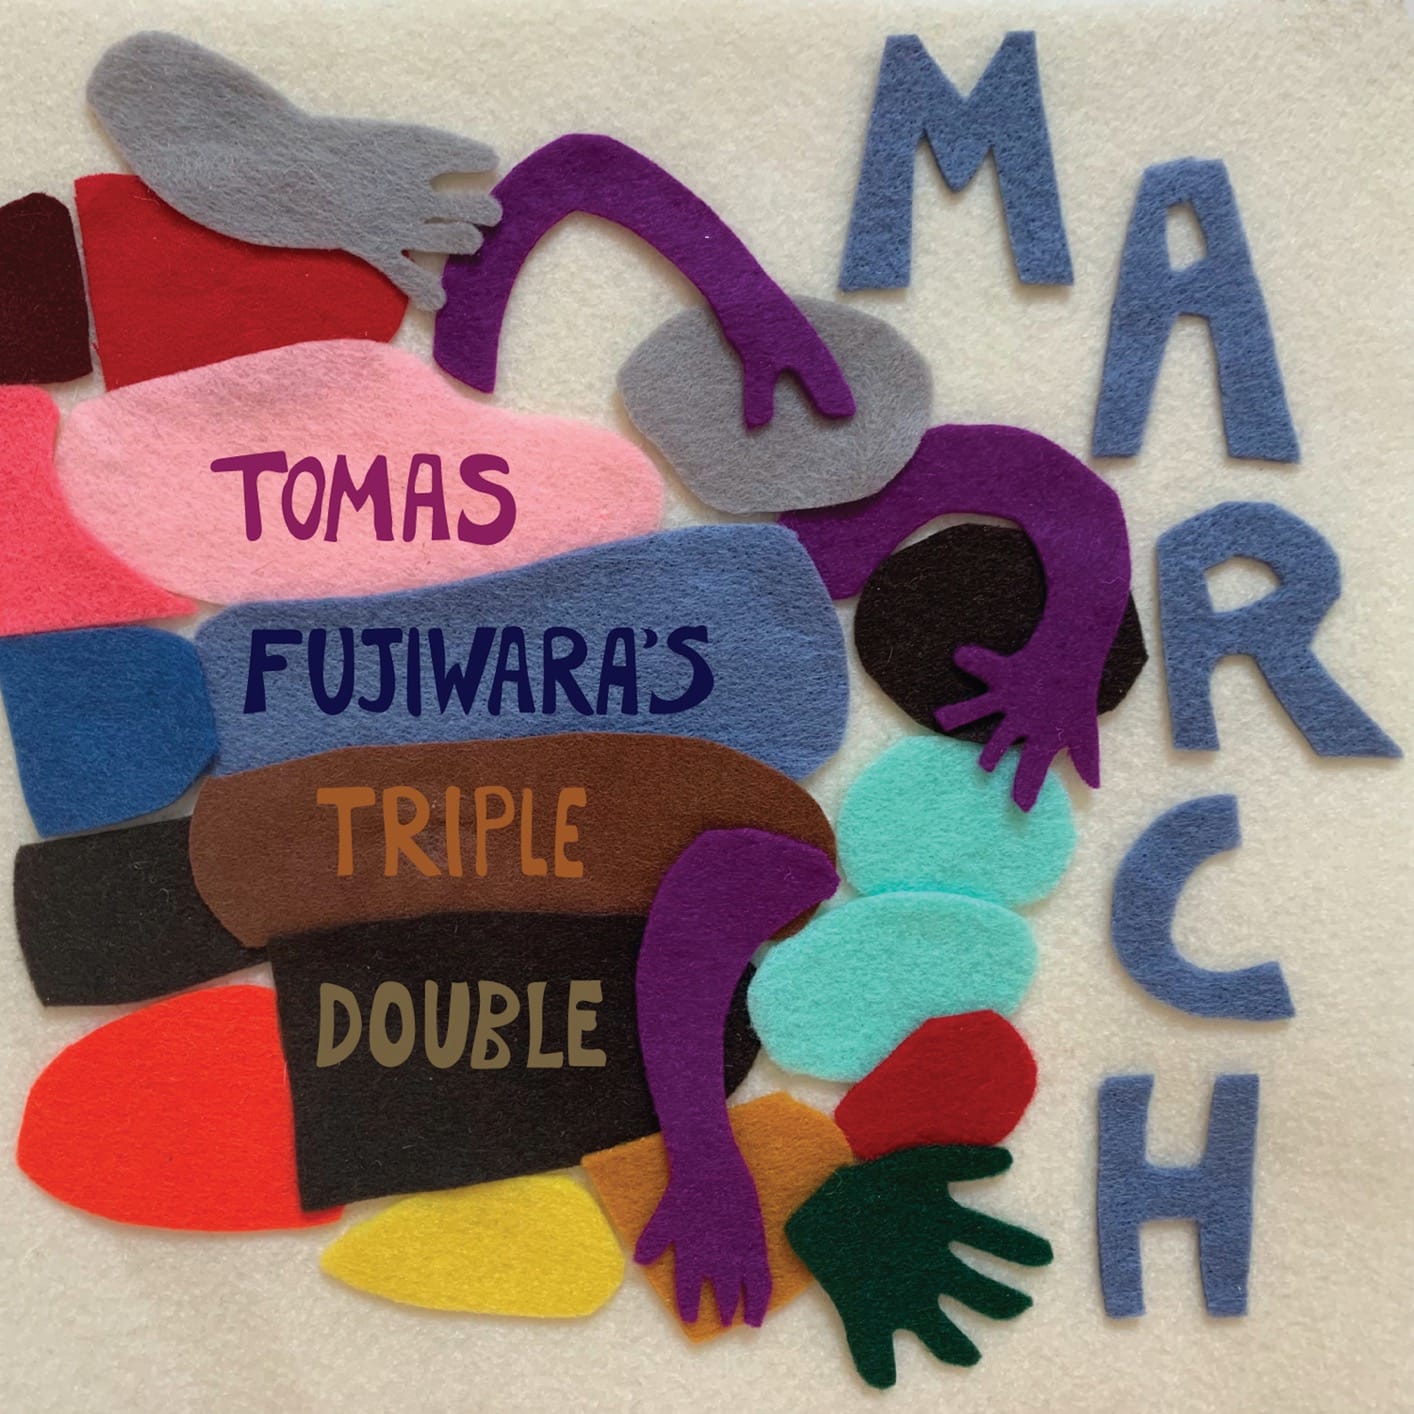 TOMAS FUJIWARA’S TRIPLE DOUBLE: March